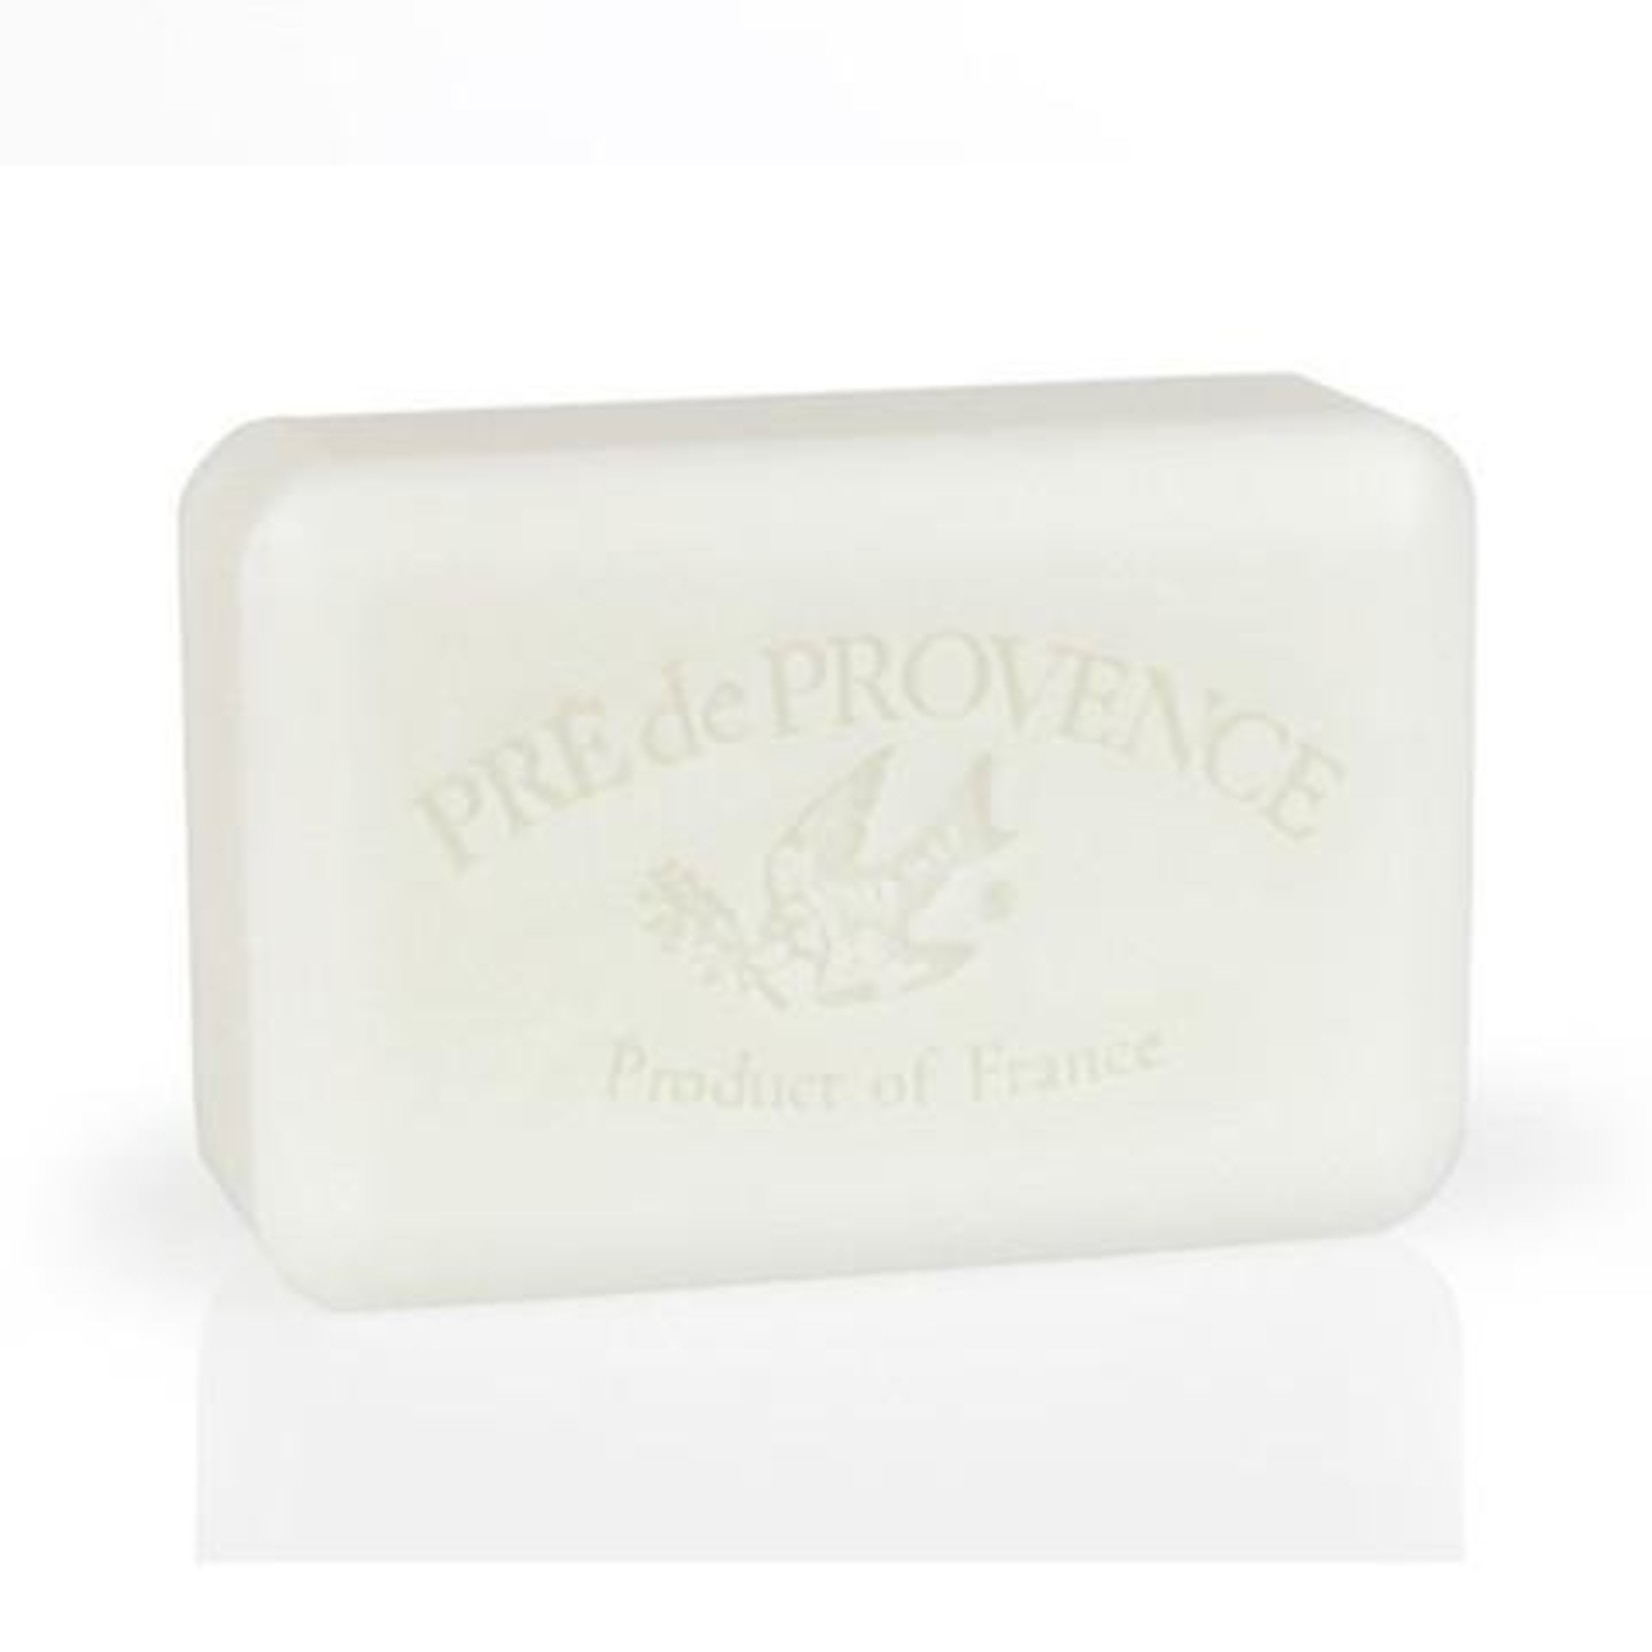 European Soaps Pre de Provence Soap, 150g